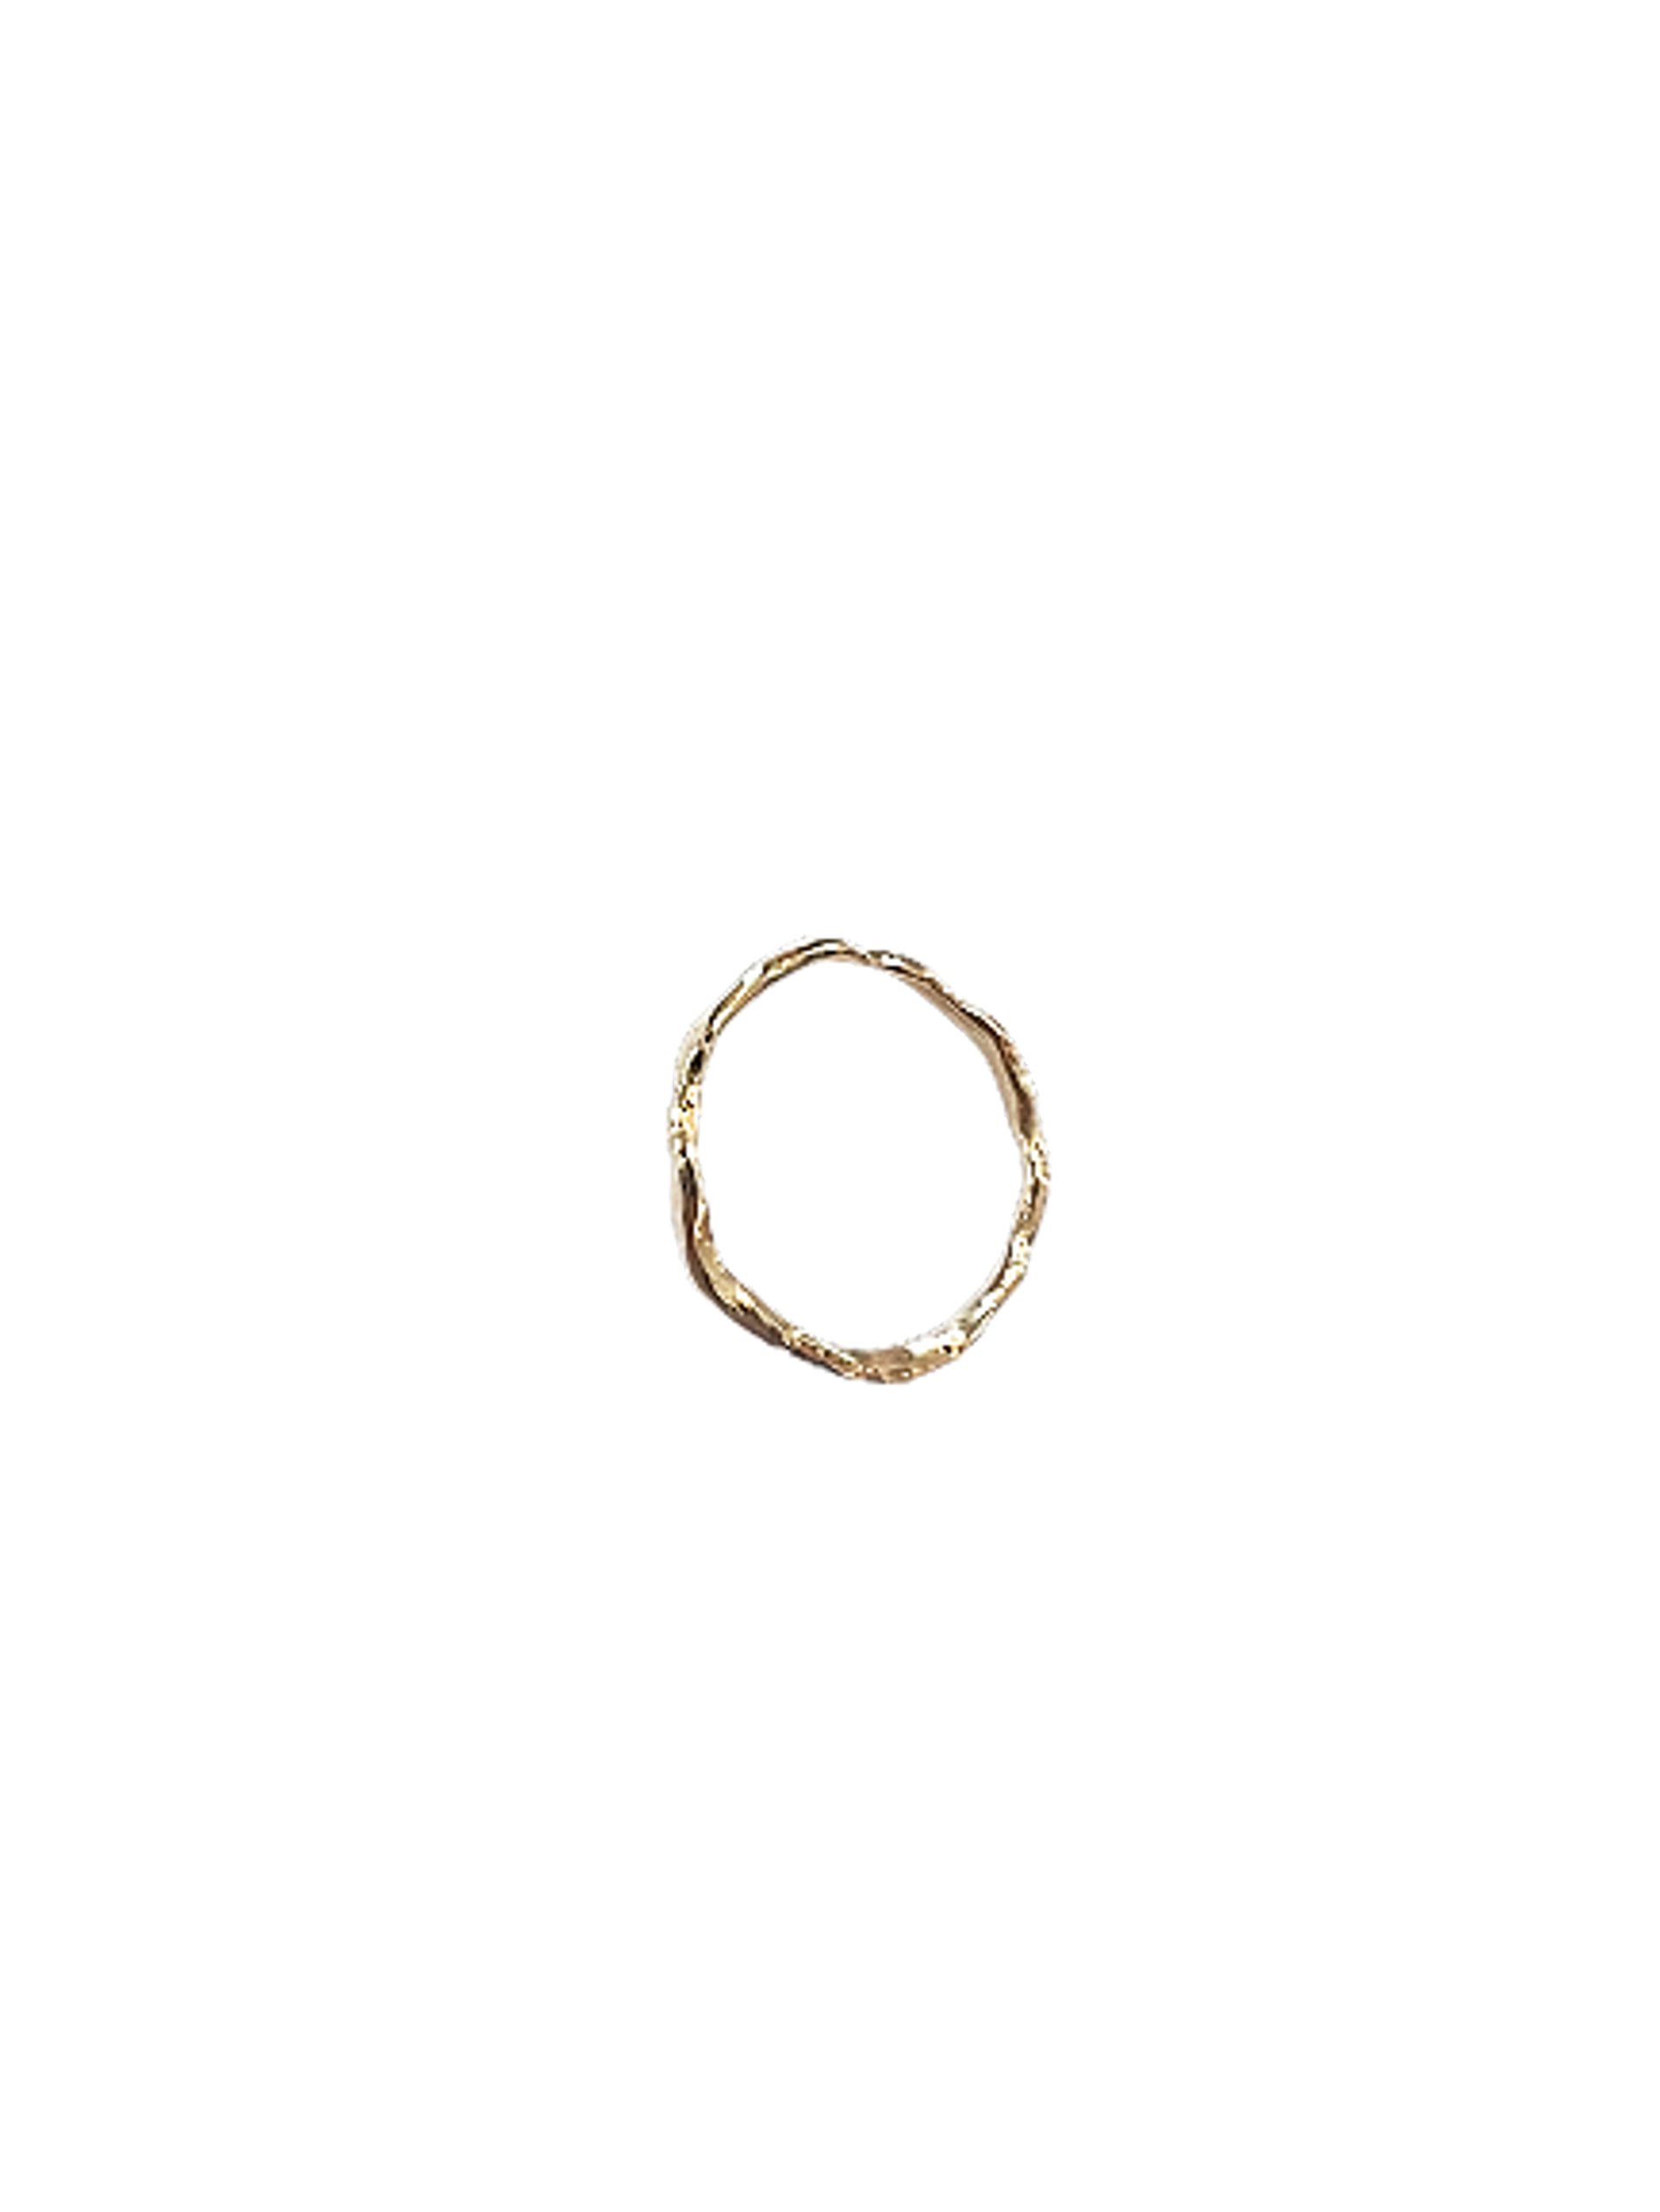 Ripple Ring - 14k Gold by Kristen Baird